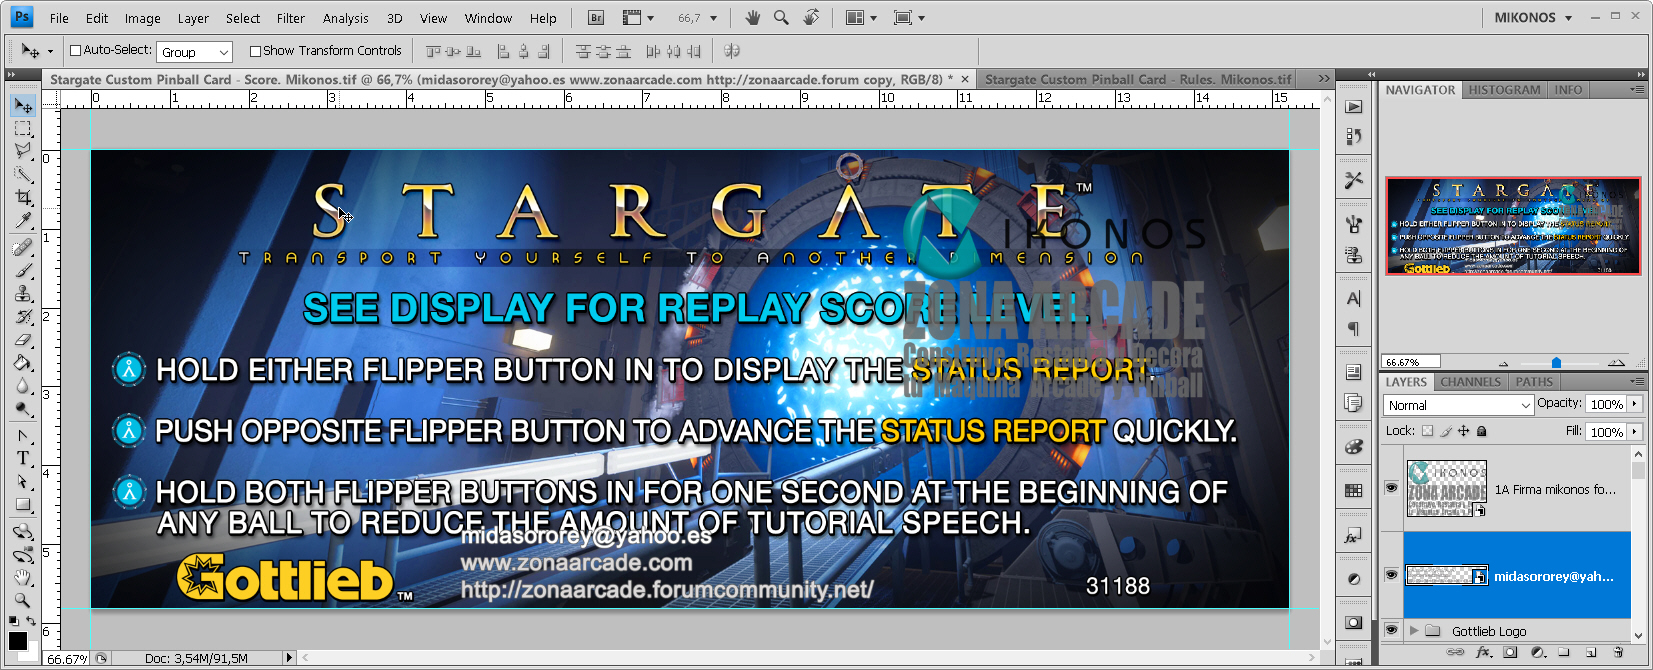 Stargate%20Pinball%20Card%20Customized%20-%20Score.%20Mikonos1.jpg